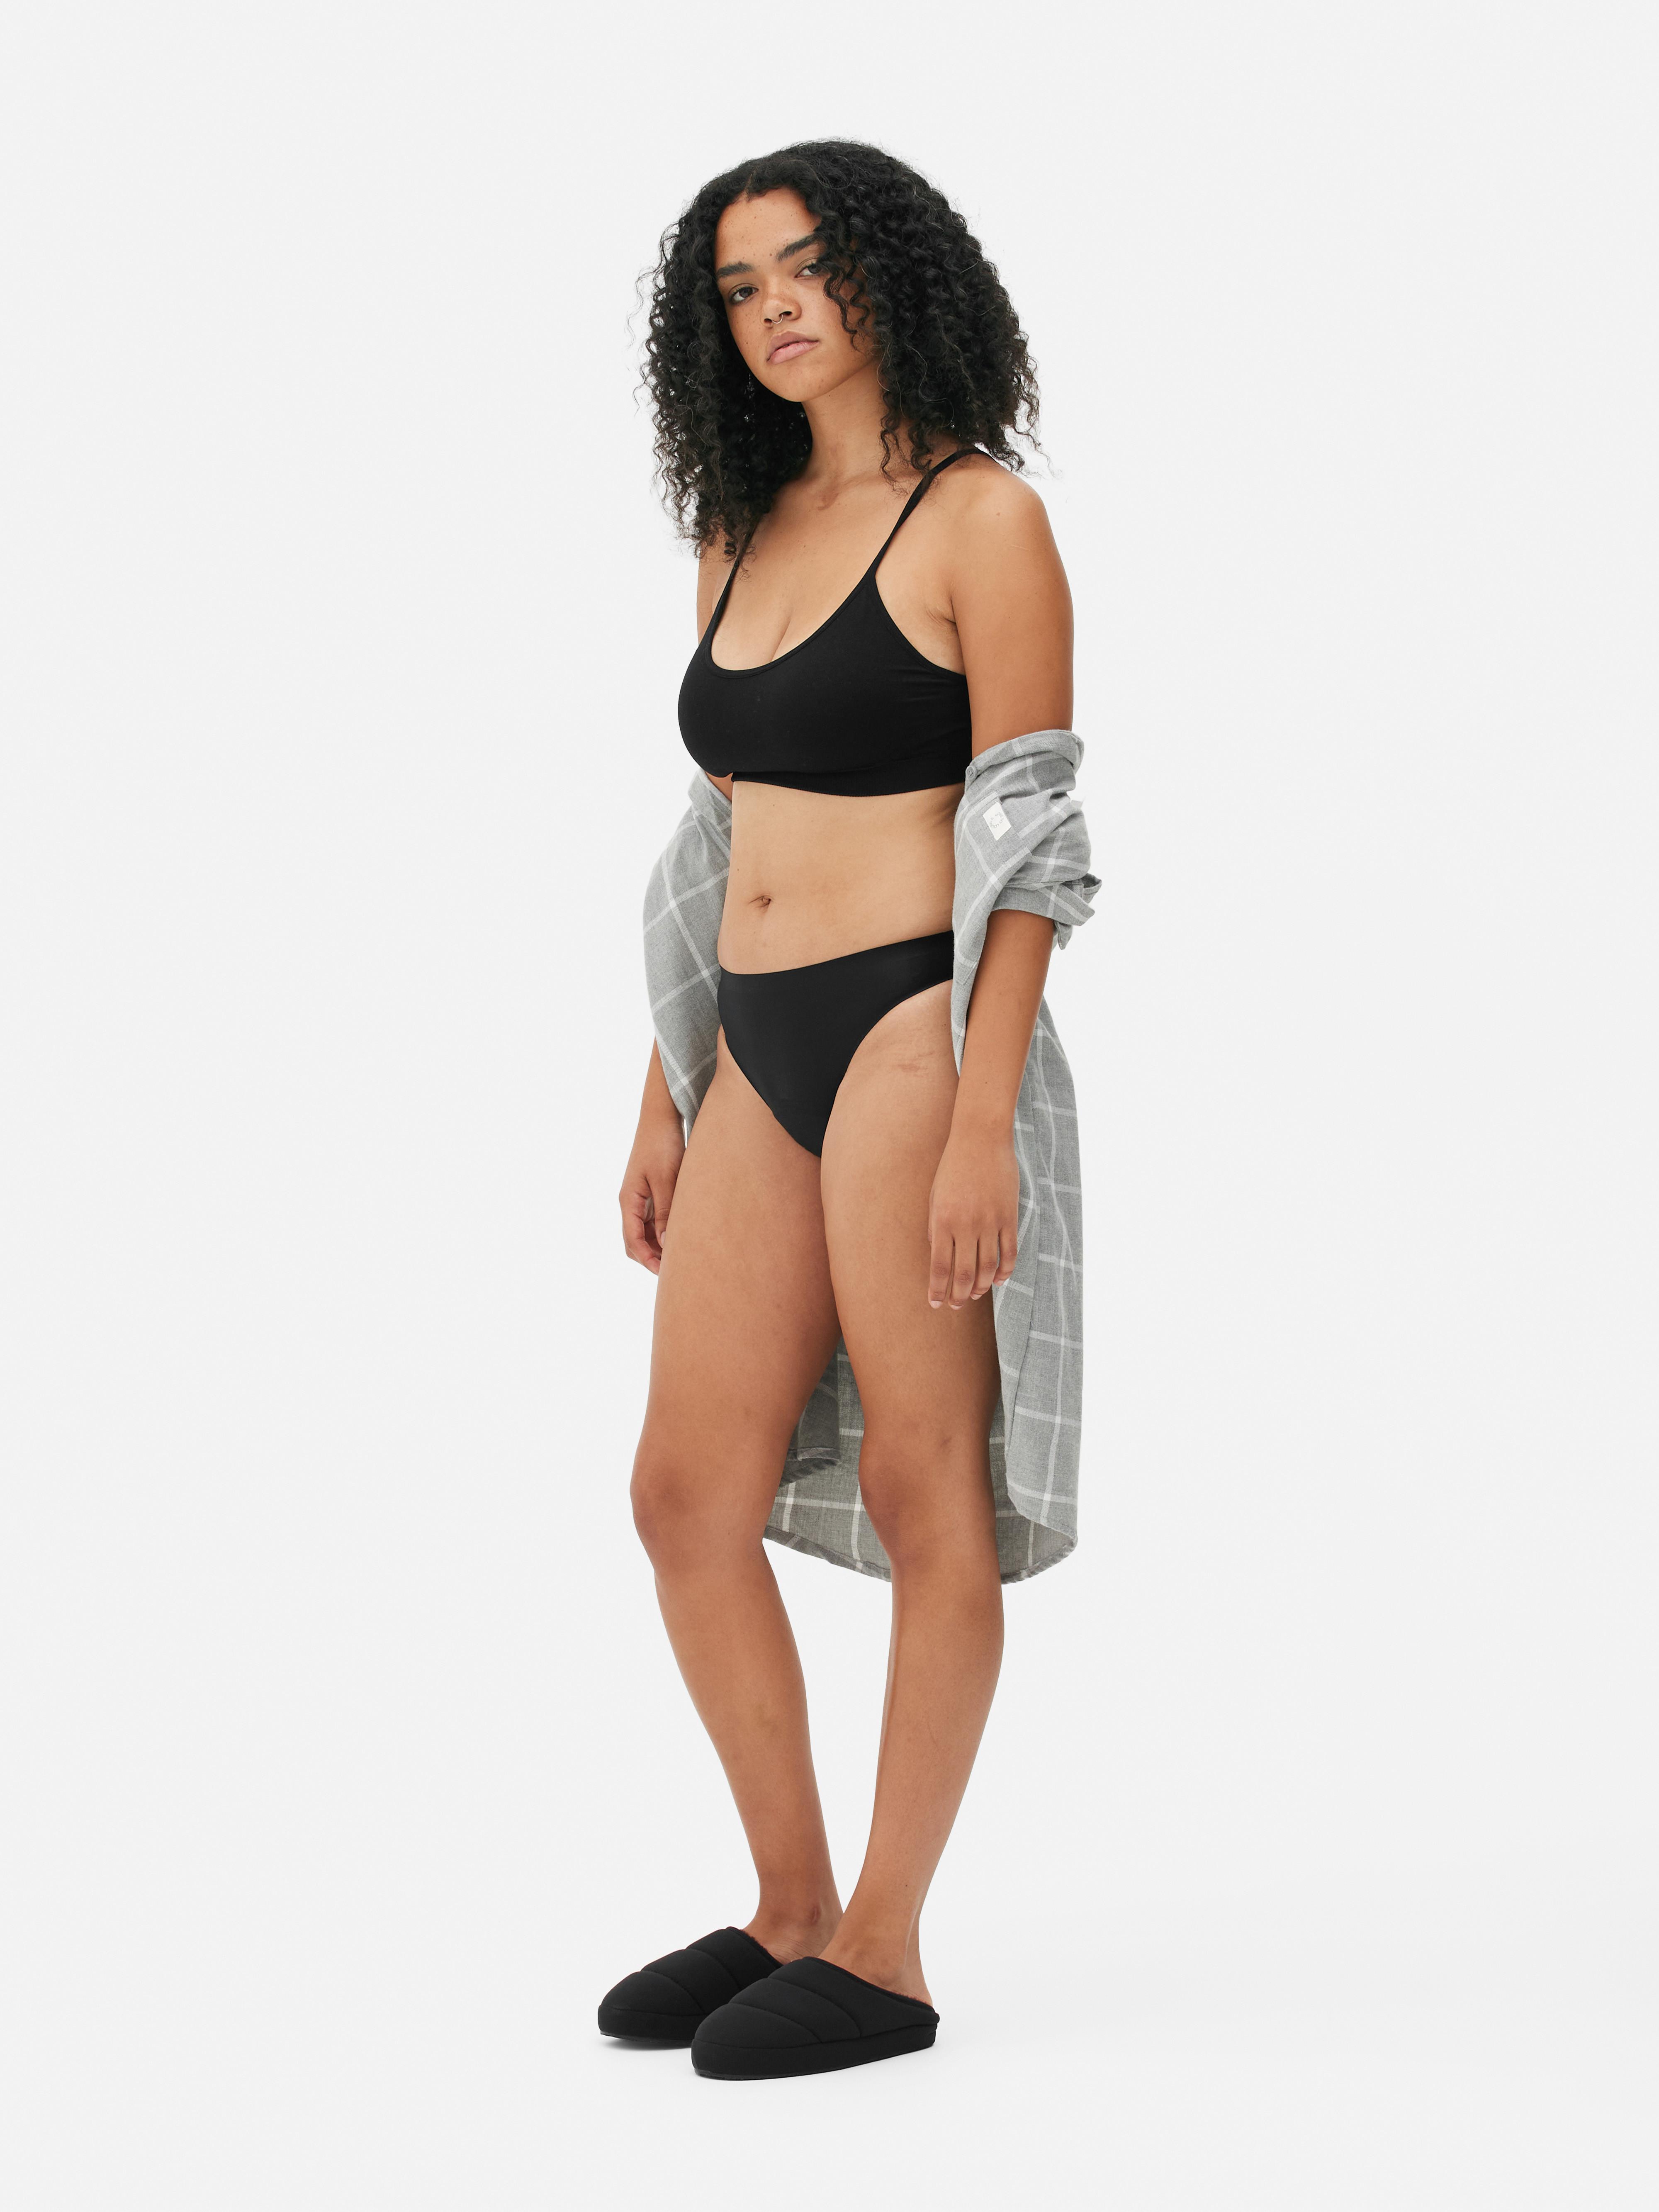 Primark shoppers divided over new reusable period underwear range -  LancsLive